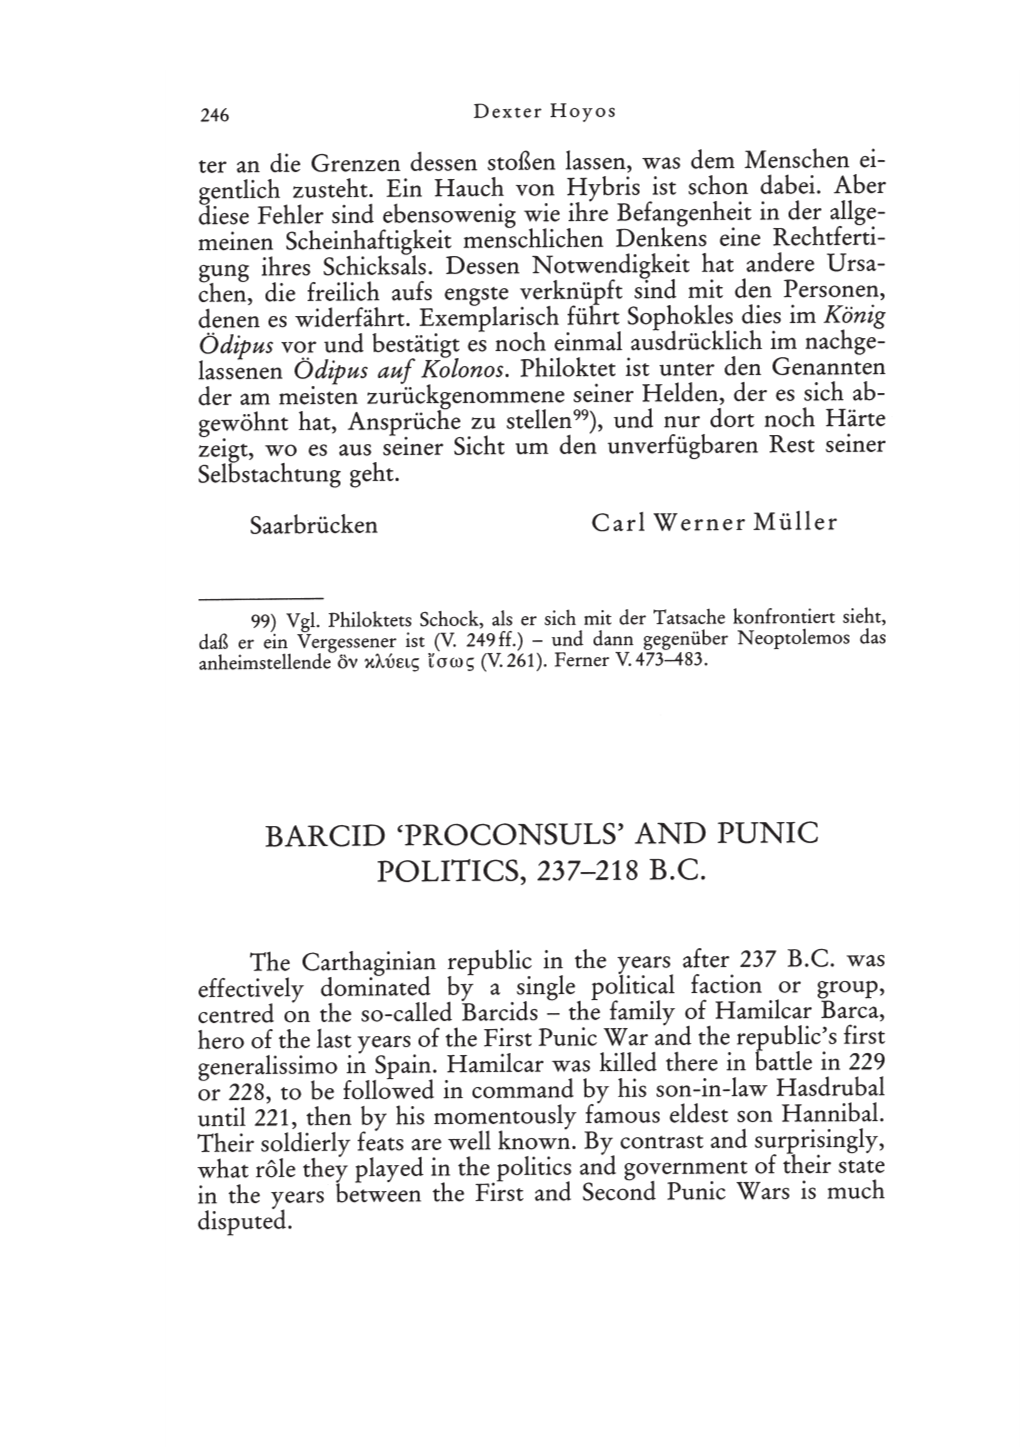 Barcid 'Proconsuls' and Punic Politics, 237-218 B.C